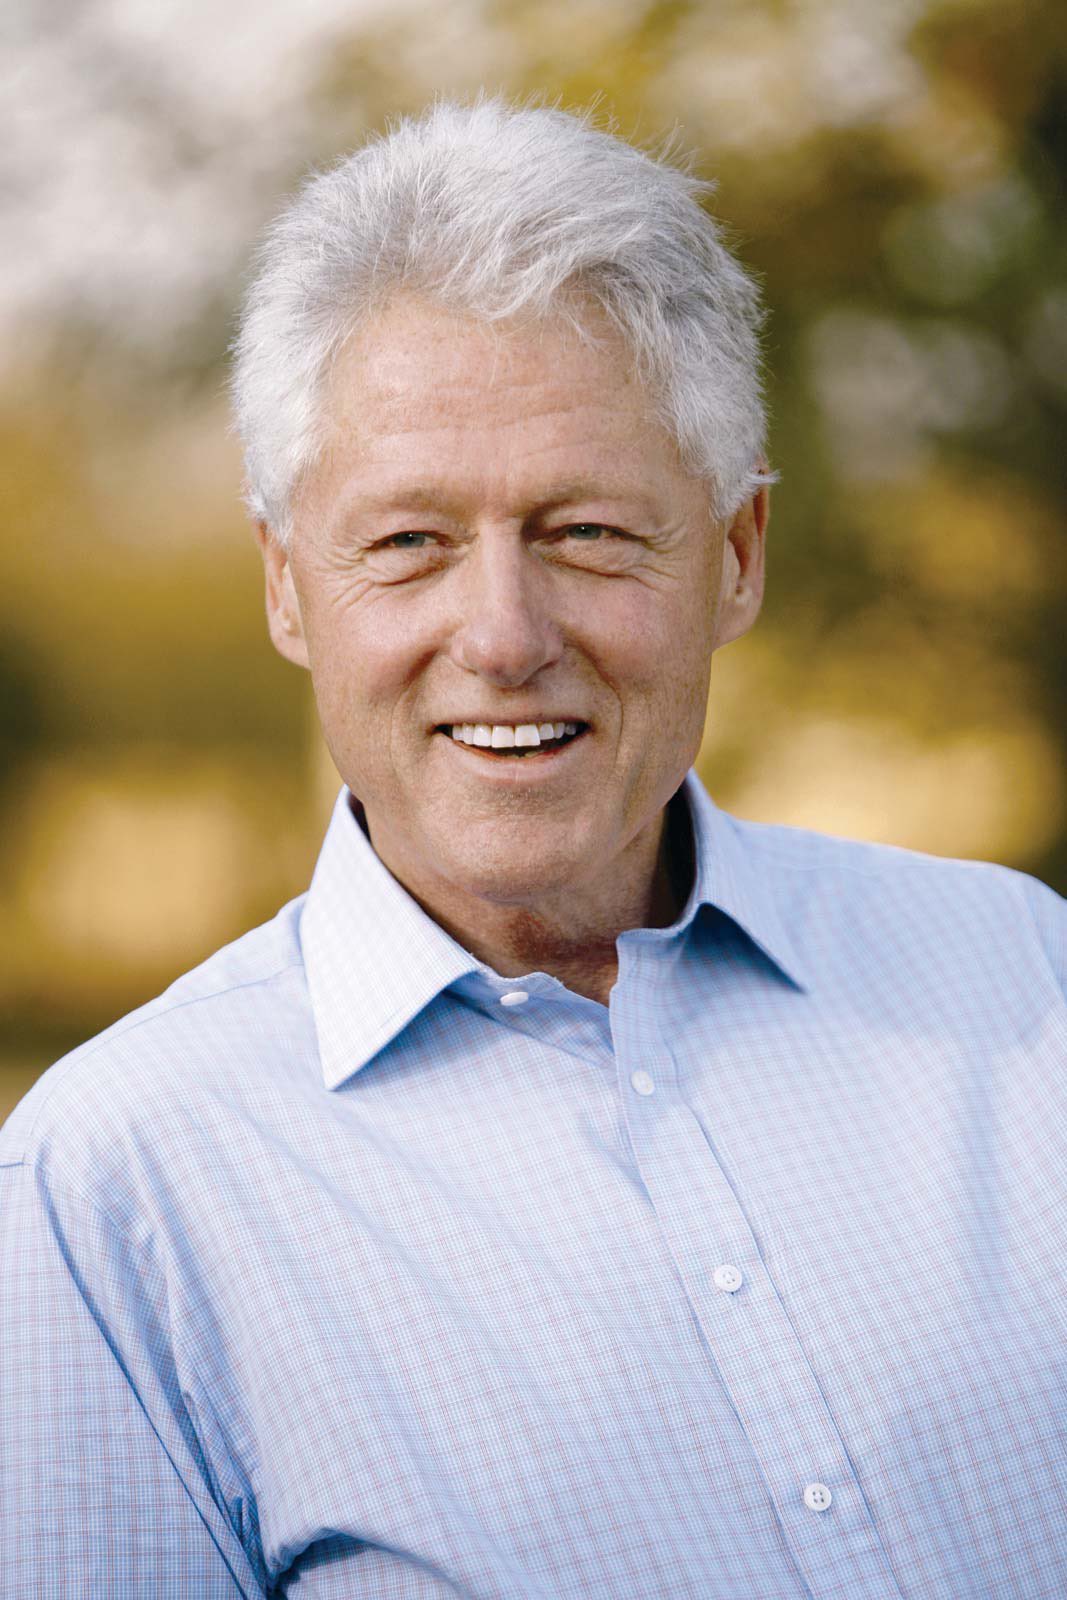 Happy Birthday President Bill Clinton!        